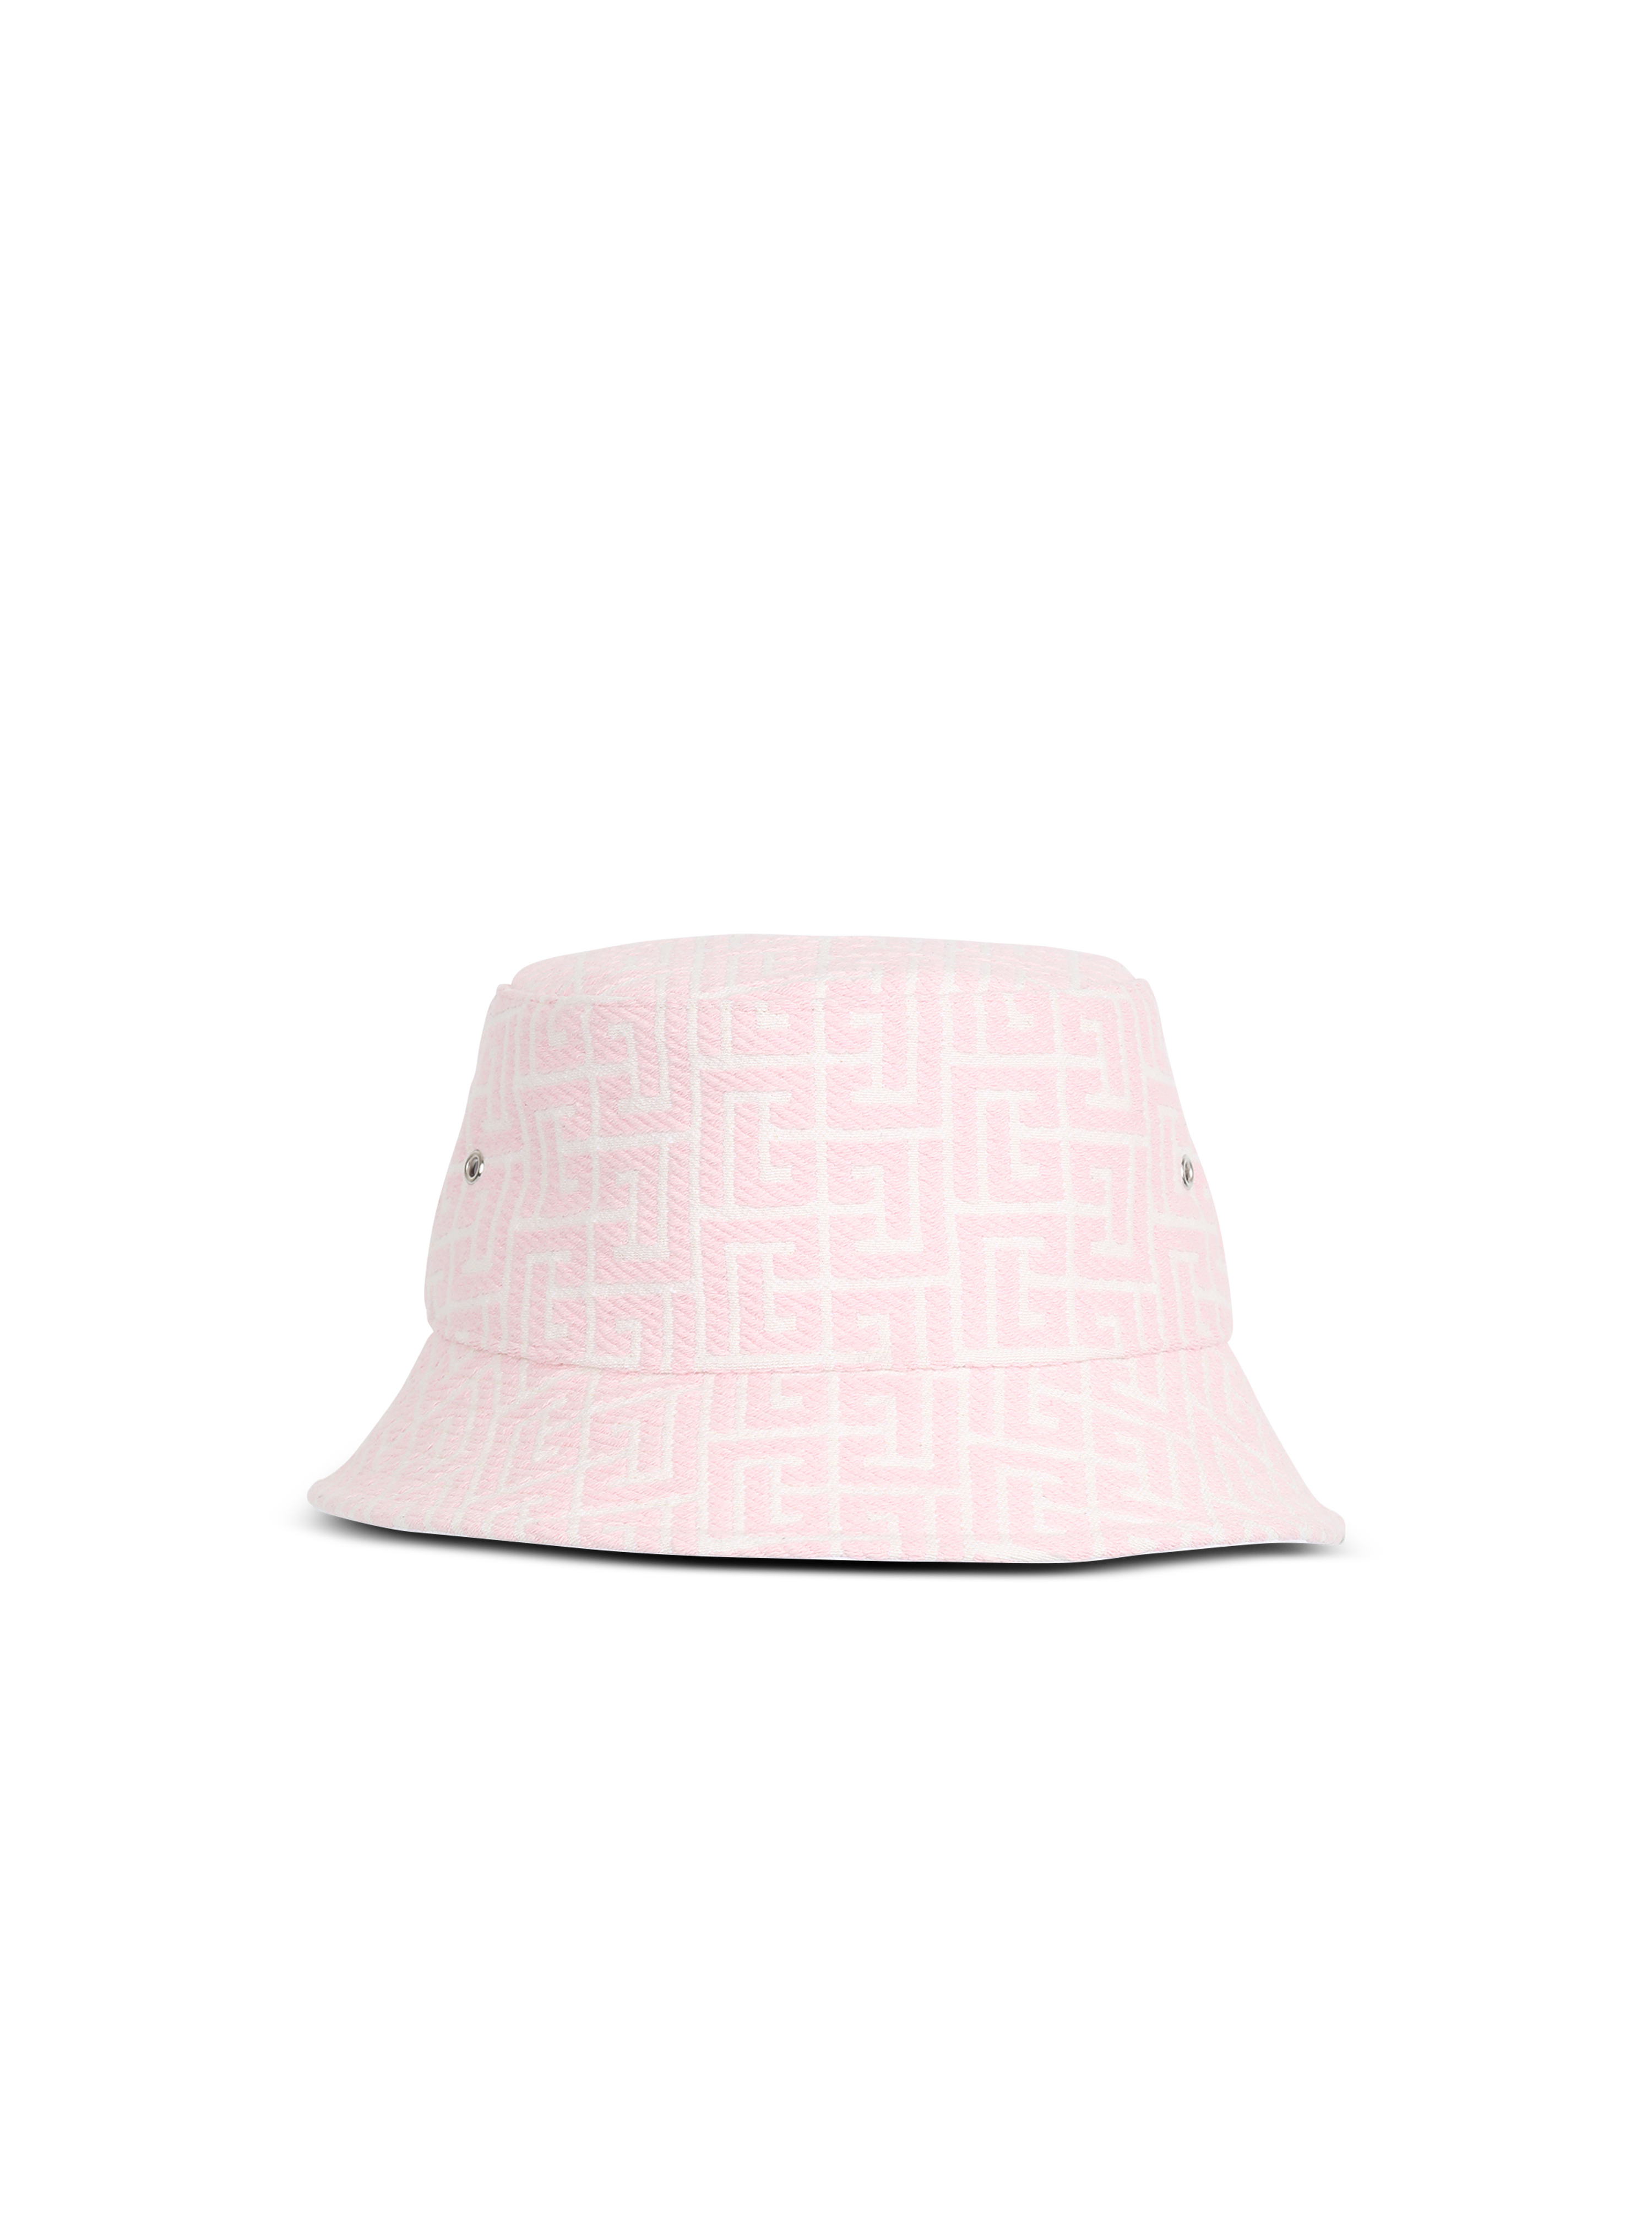 EXCLUSIVE - Balmain-monogrammed jacquard bucket hat, pink